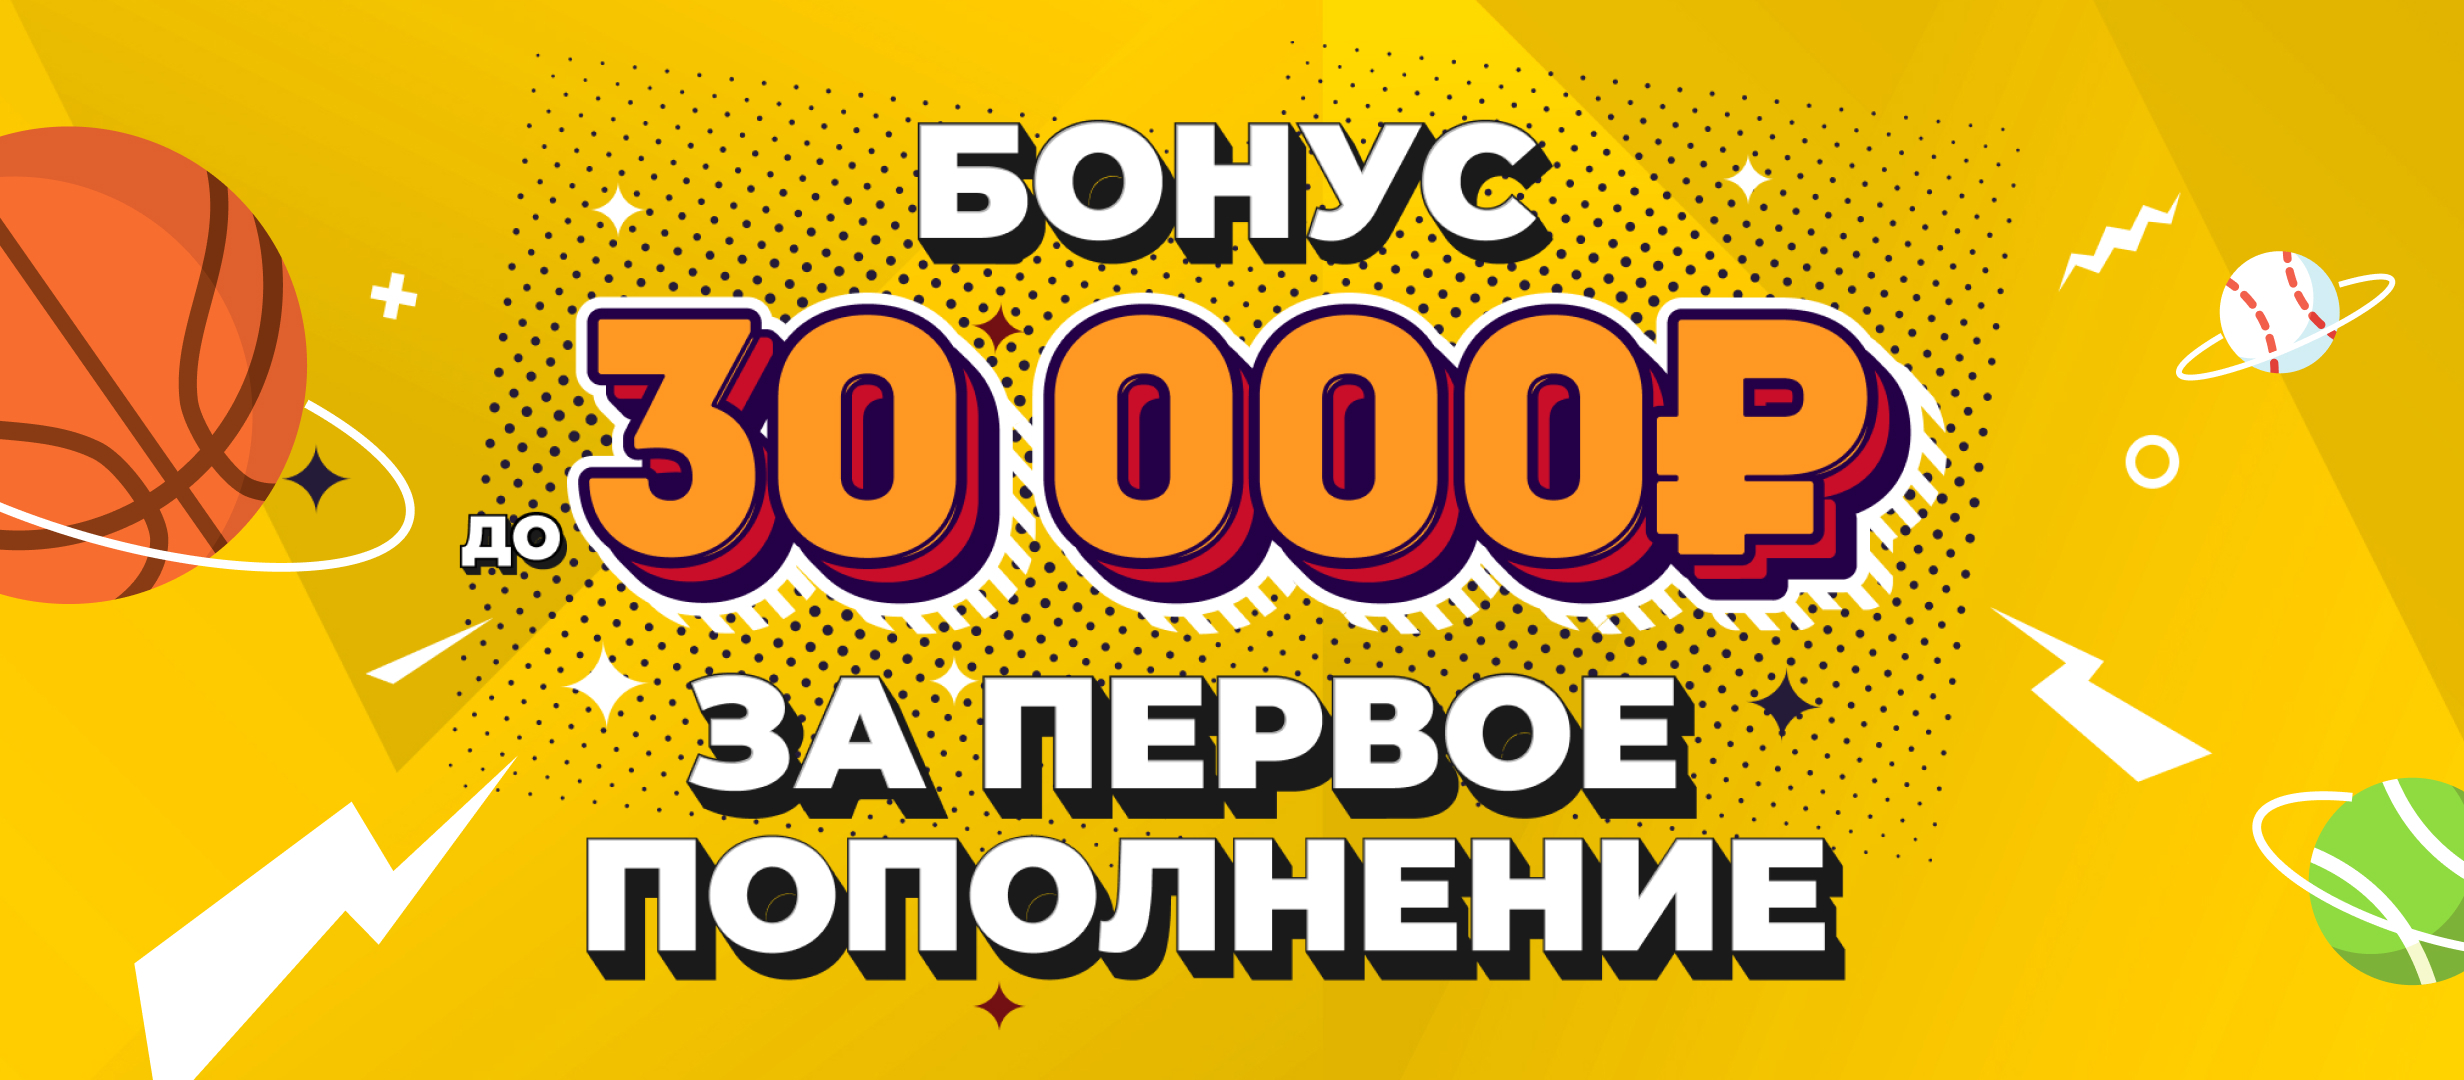 Бк олимп бонус 1000 рублей букмекерская контора для андроид